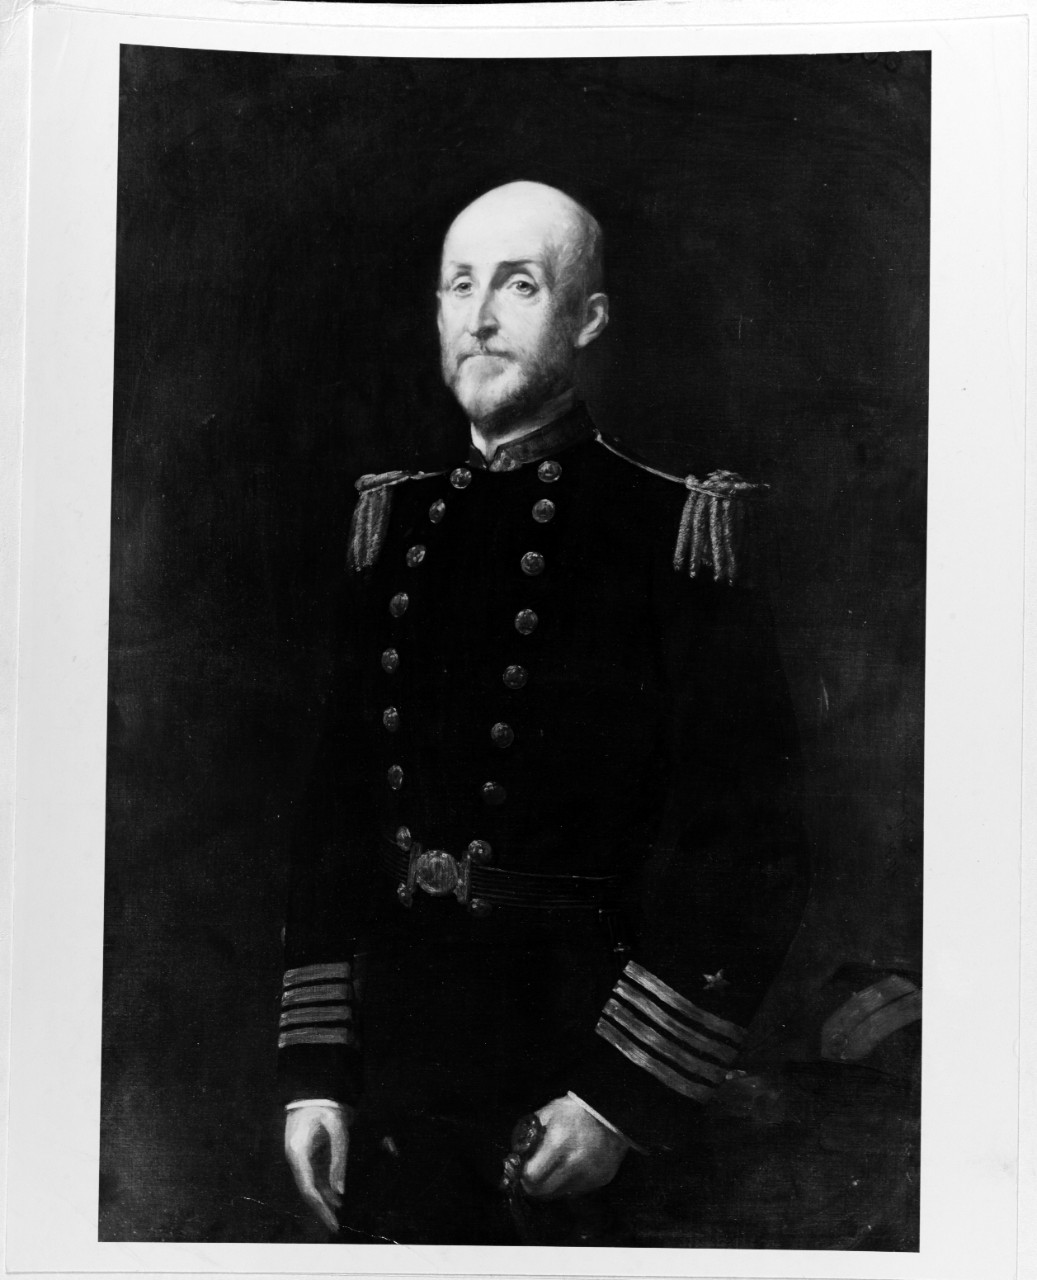 Captain Alfred Thayer Mahan, U.S. Navy